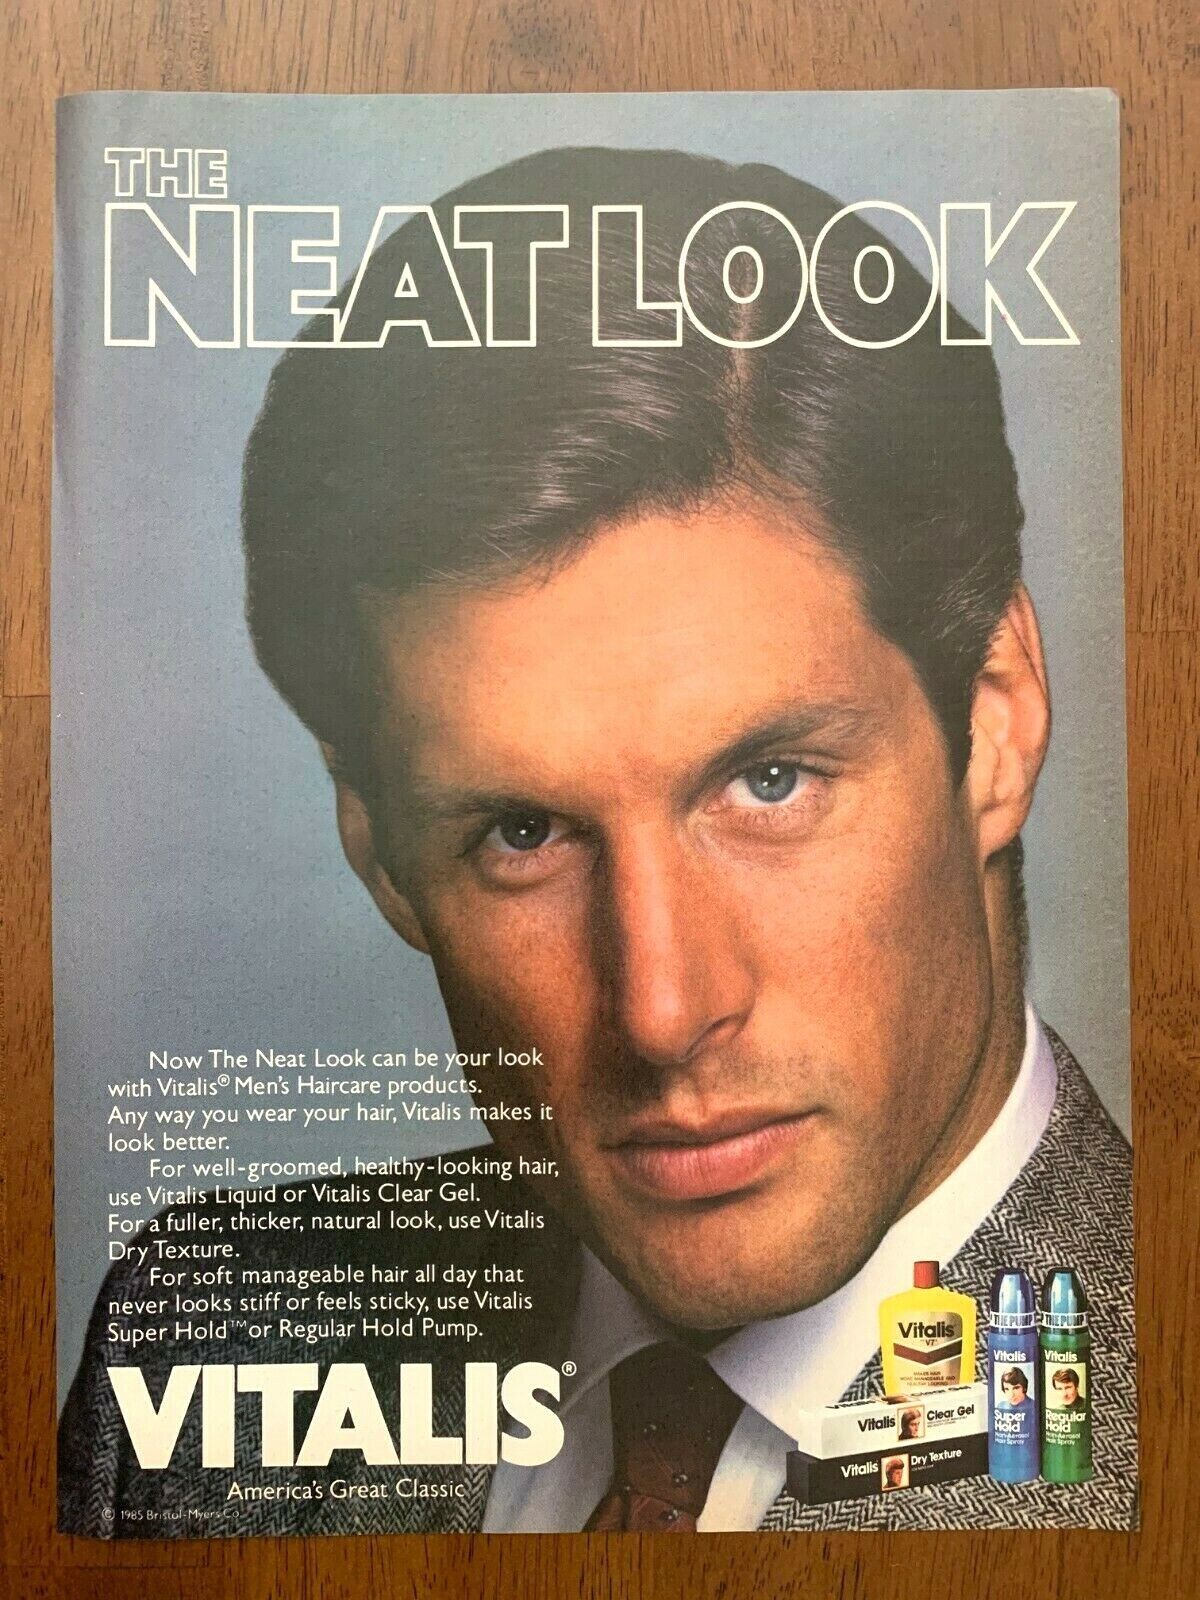 1985 Vitalis Haircare Vintage Print Ad/Poster Retro Fashion Pop Art Décor 